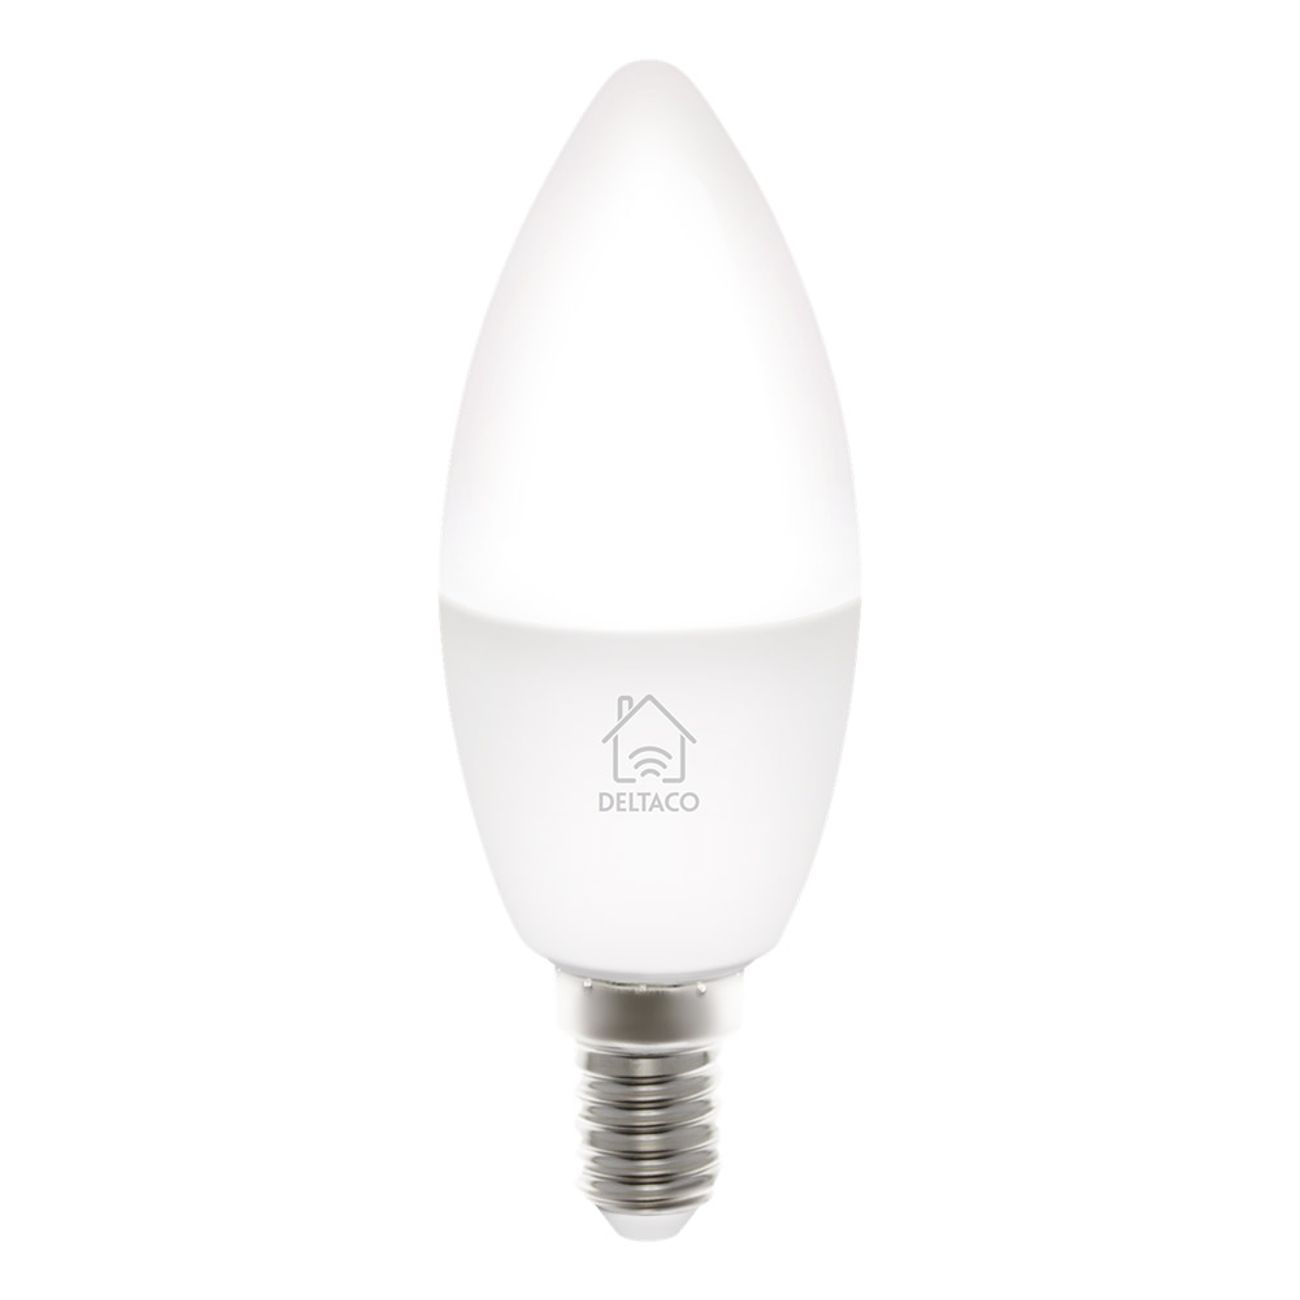 deltaco-smart-lampa-vit-2